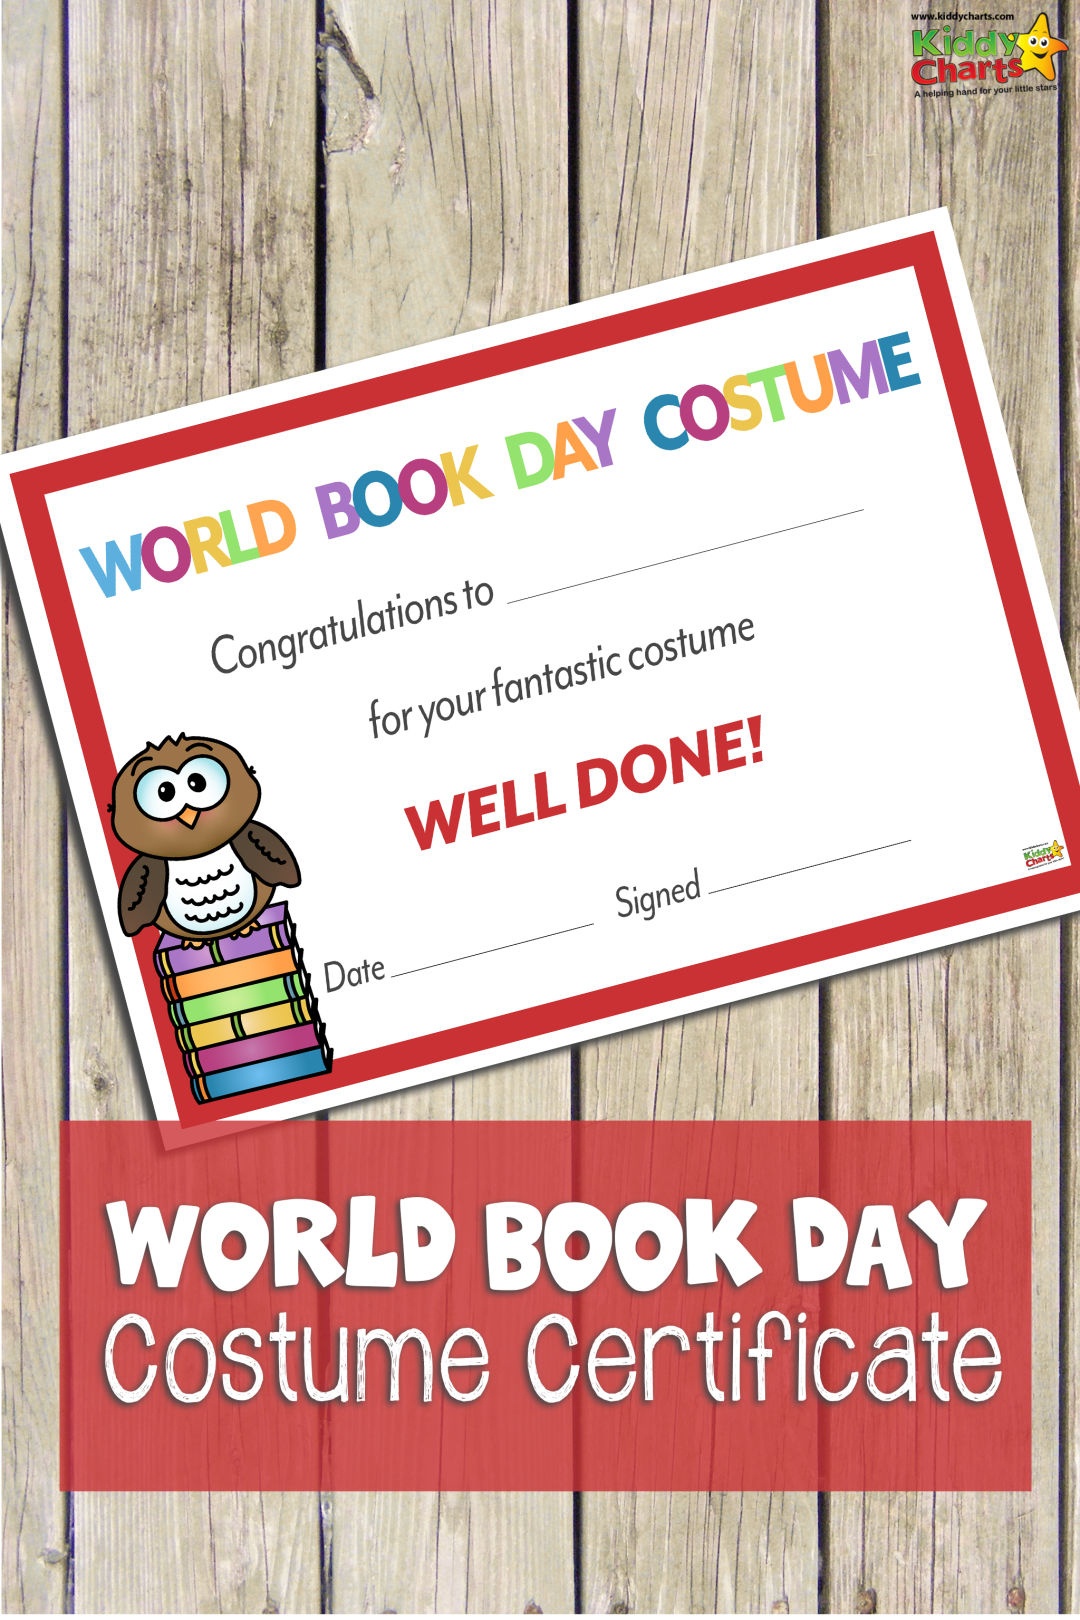 World Book Day Certificate: Best Costume - Best Costume Certificate - Best Costume Certificate Printable Free